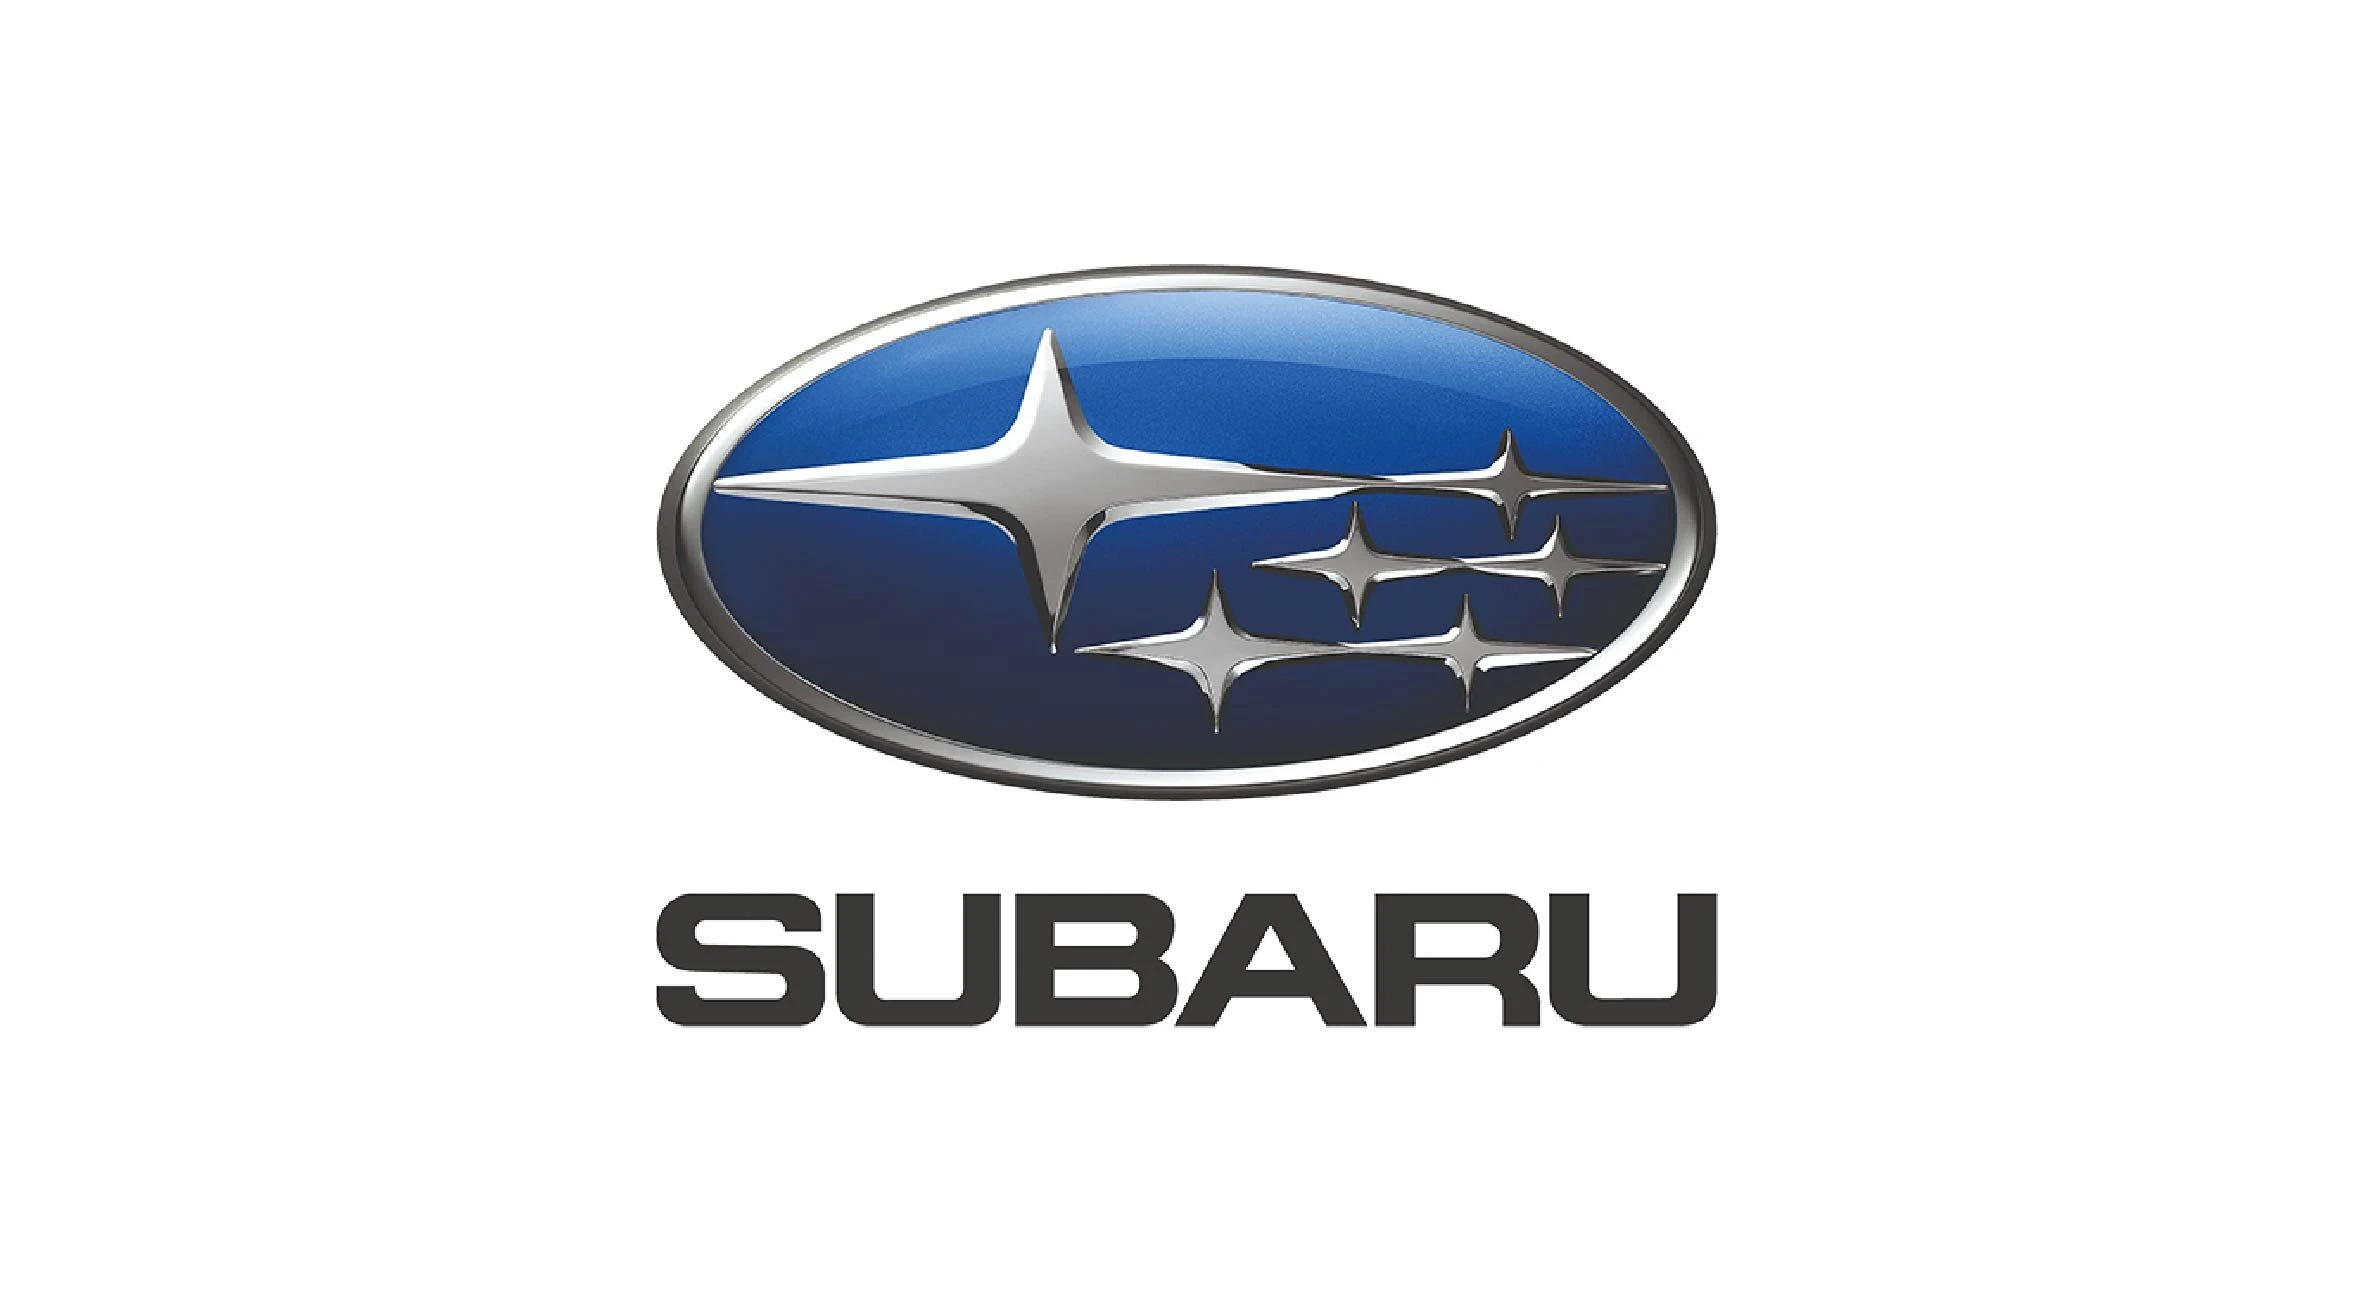 Subaru car brand logo